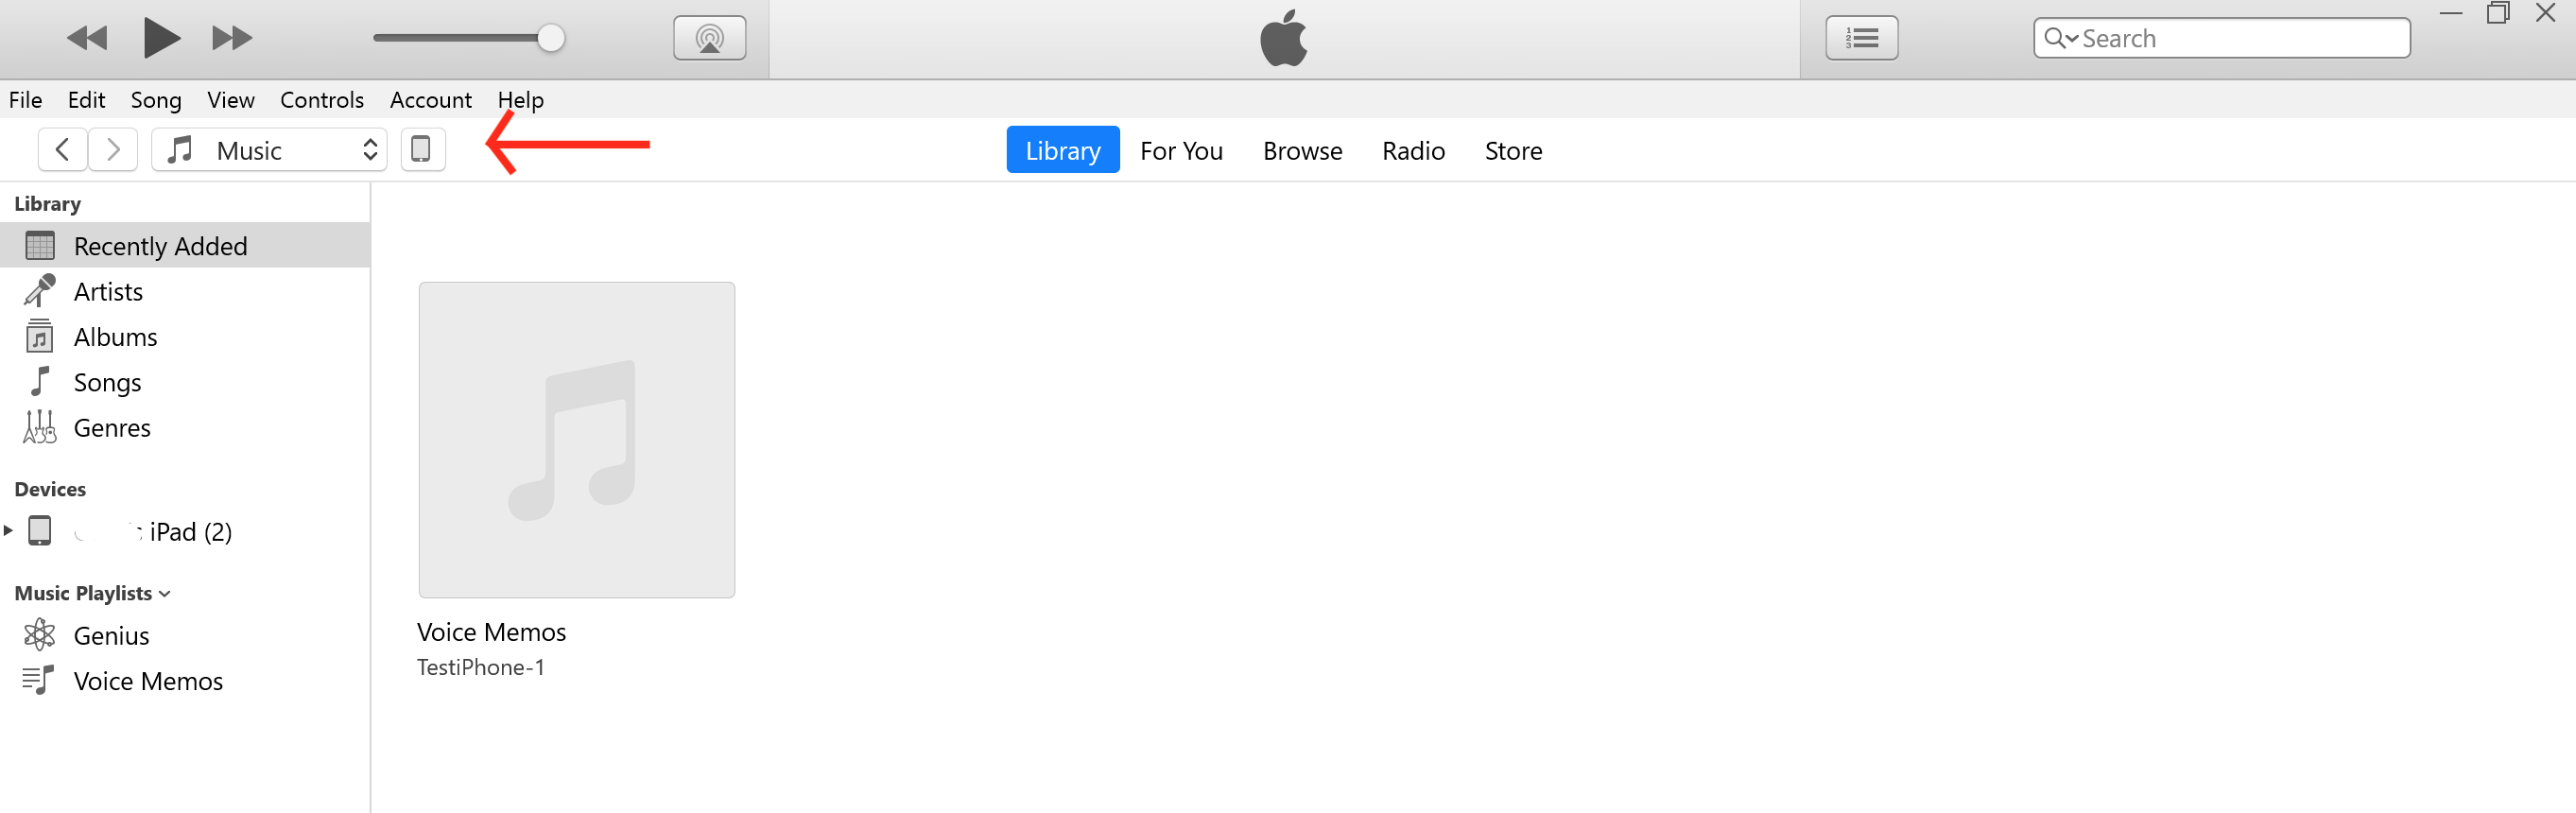 iTunes screen 1